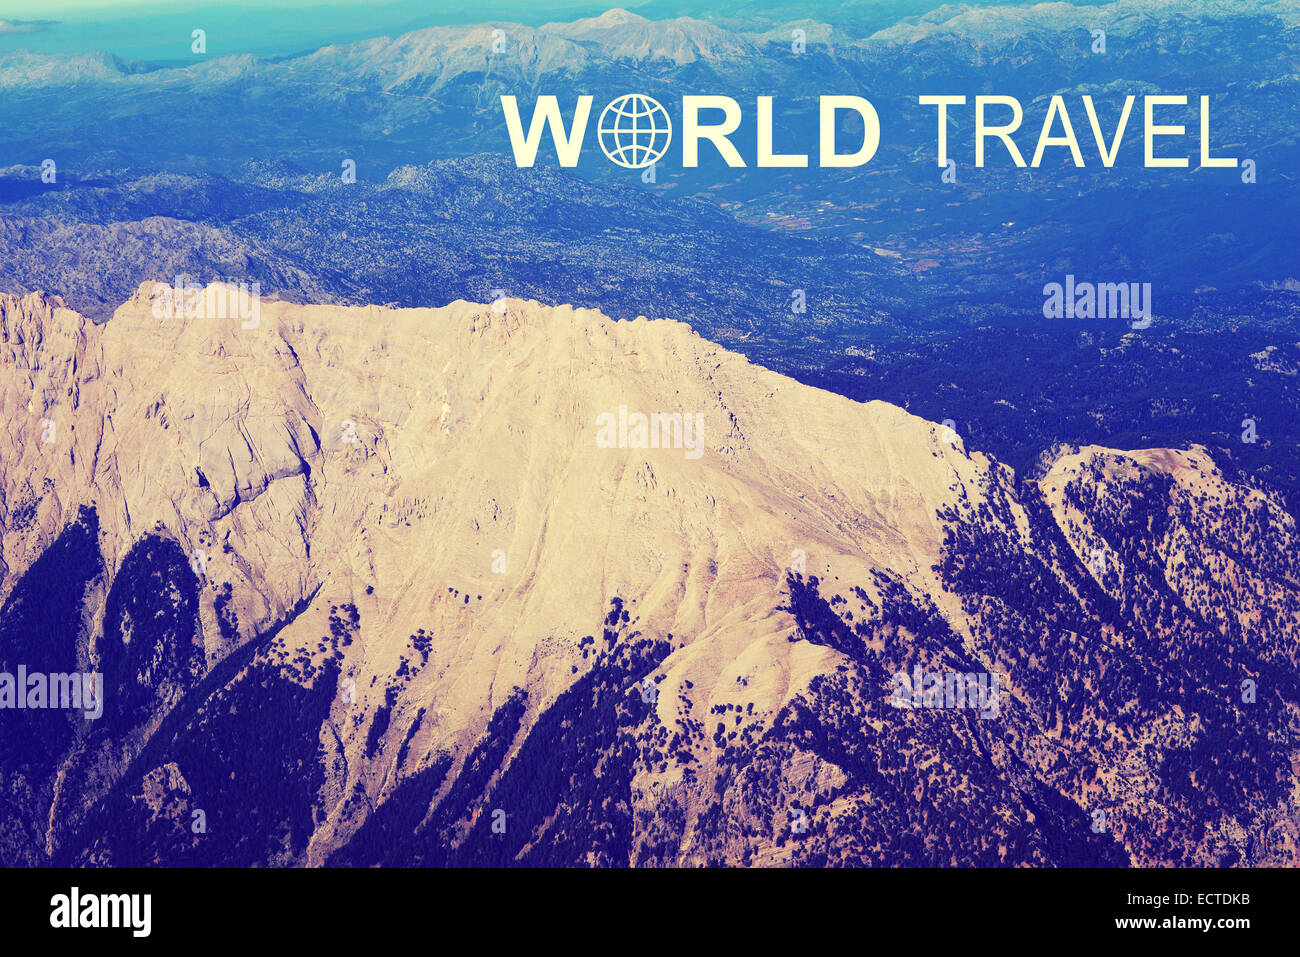 World Travel header Stock Photo